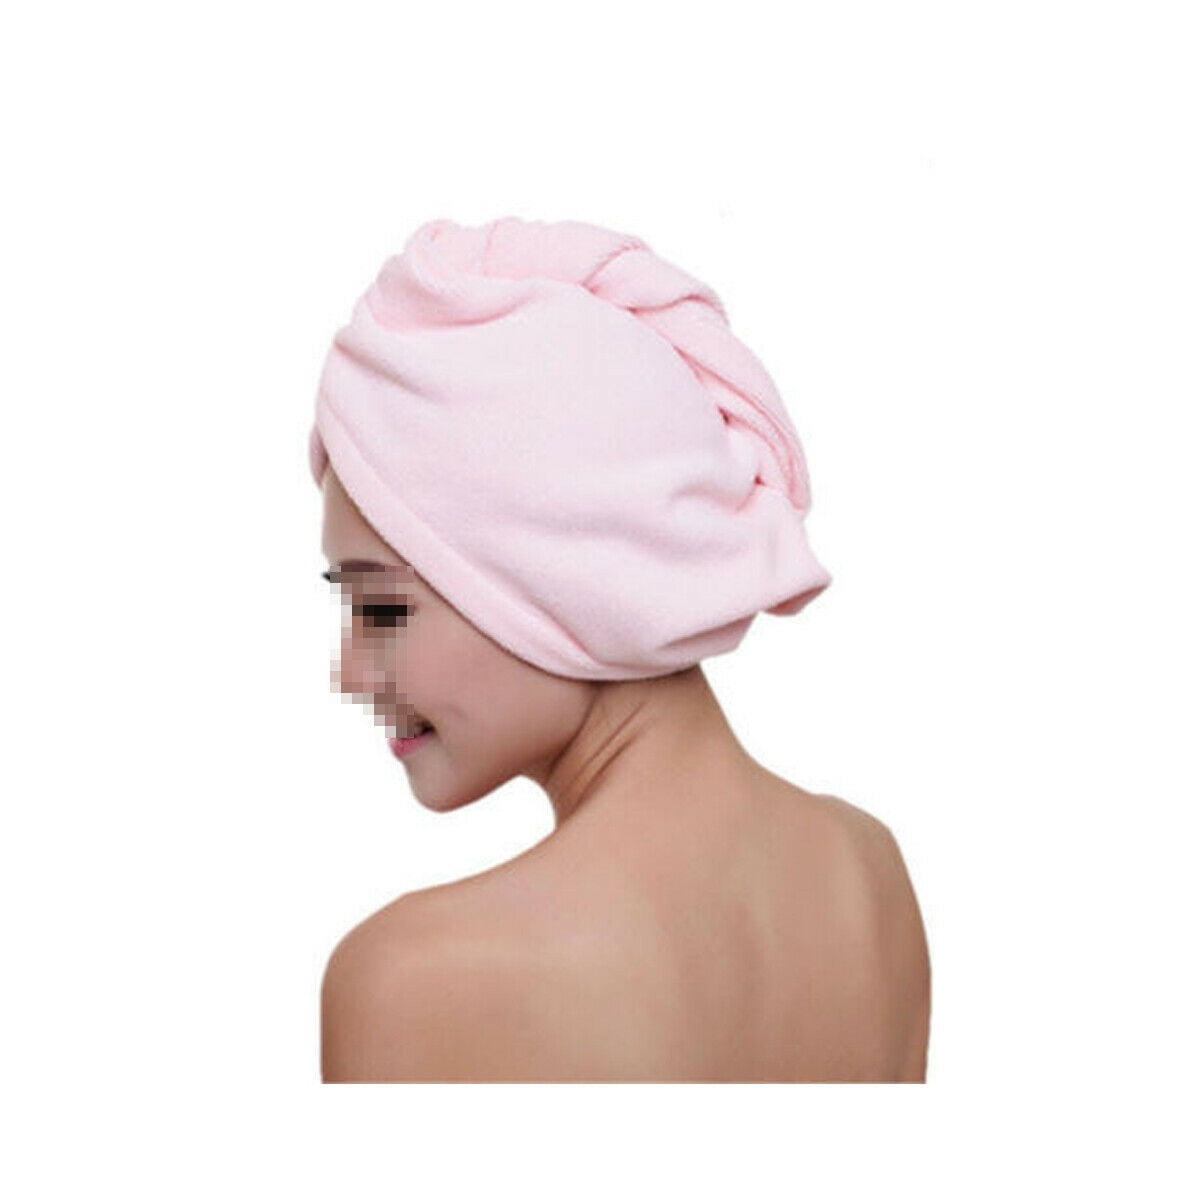 Details about   NEW Women Magic Quick Dry Hair Towel Bath Spa Head Wrap Cap Turban Bathing Tool 